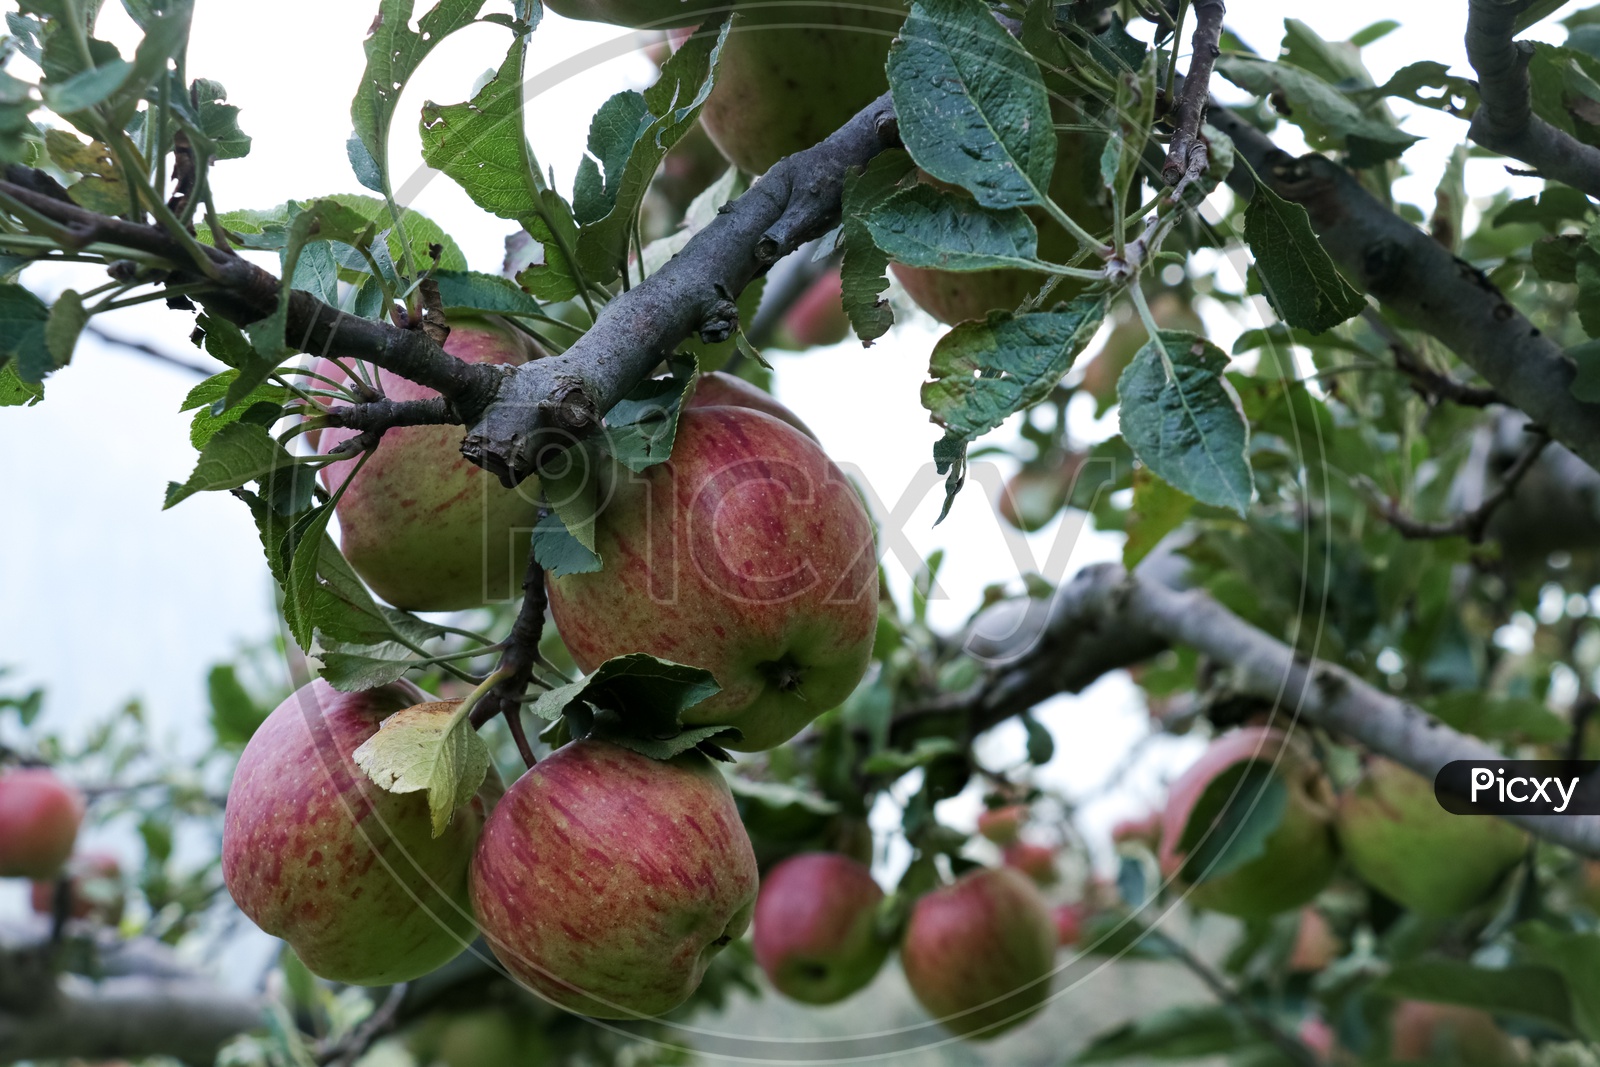 Apple trees during the harvest season